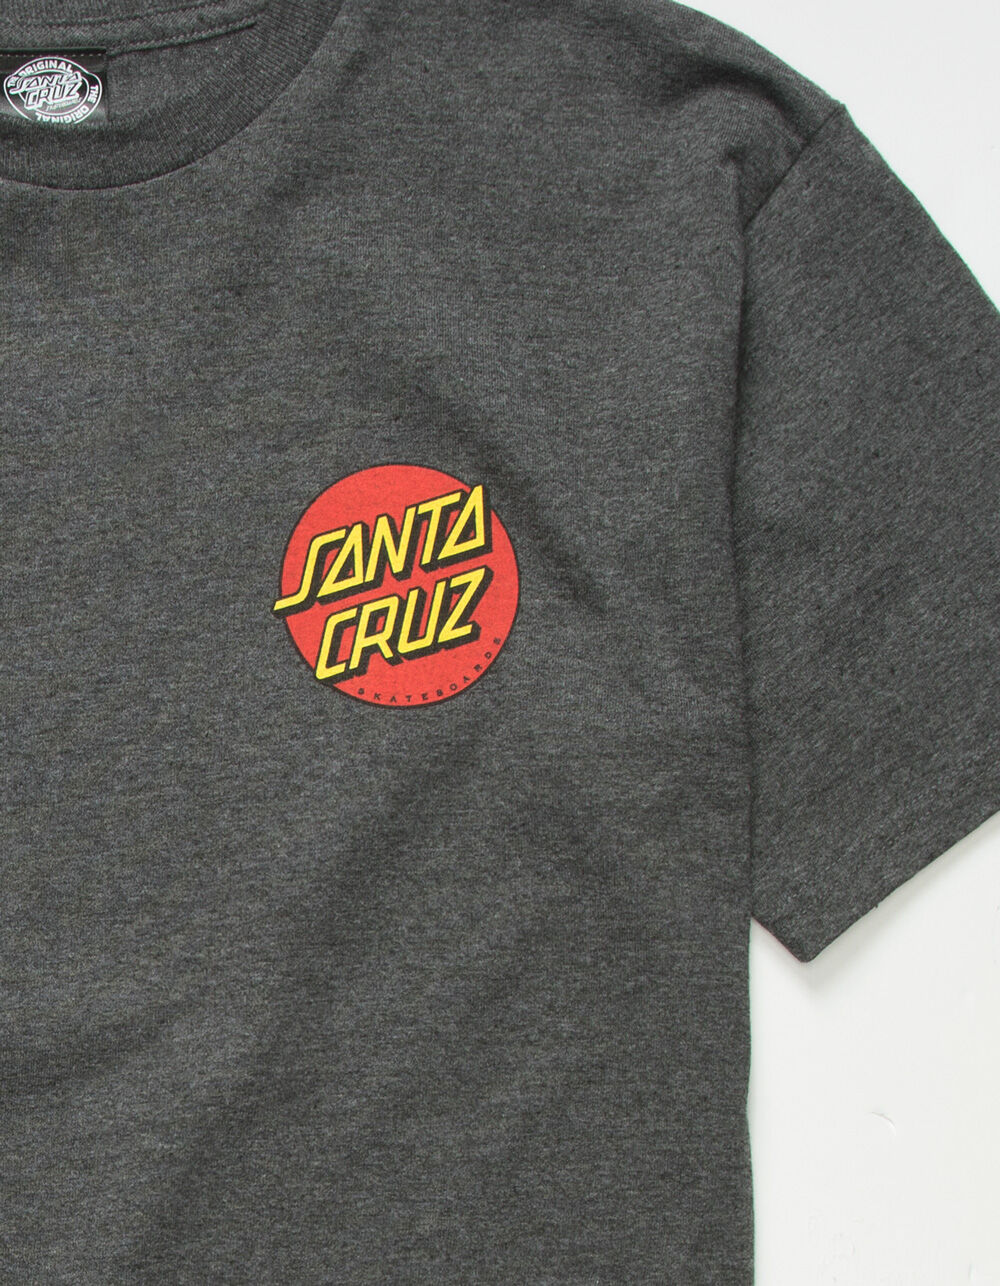 SANTA CRUZ Classic Dot Mens Charcoal T-Shirt - CHARCOAL | Tillys